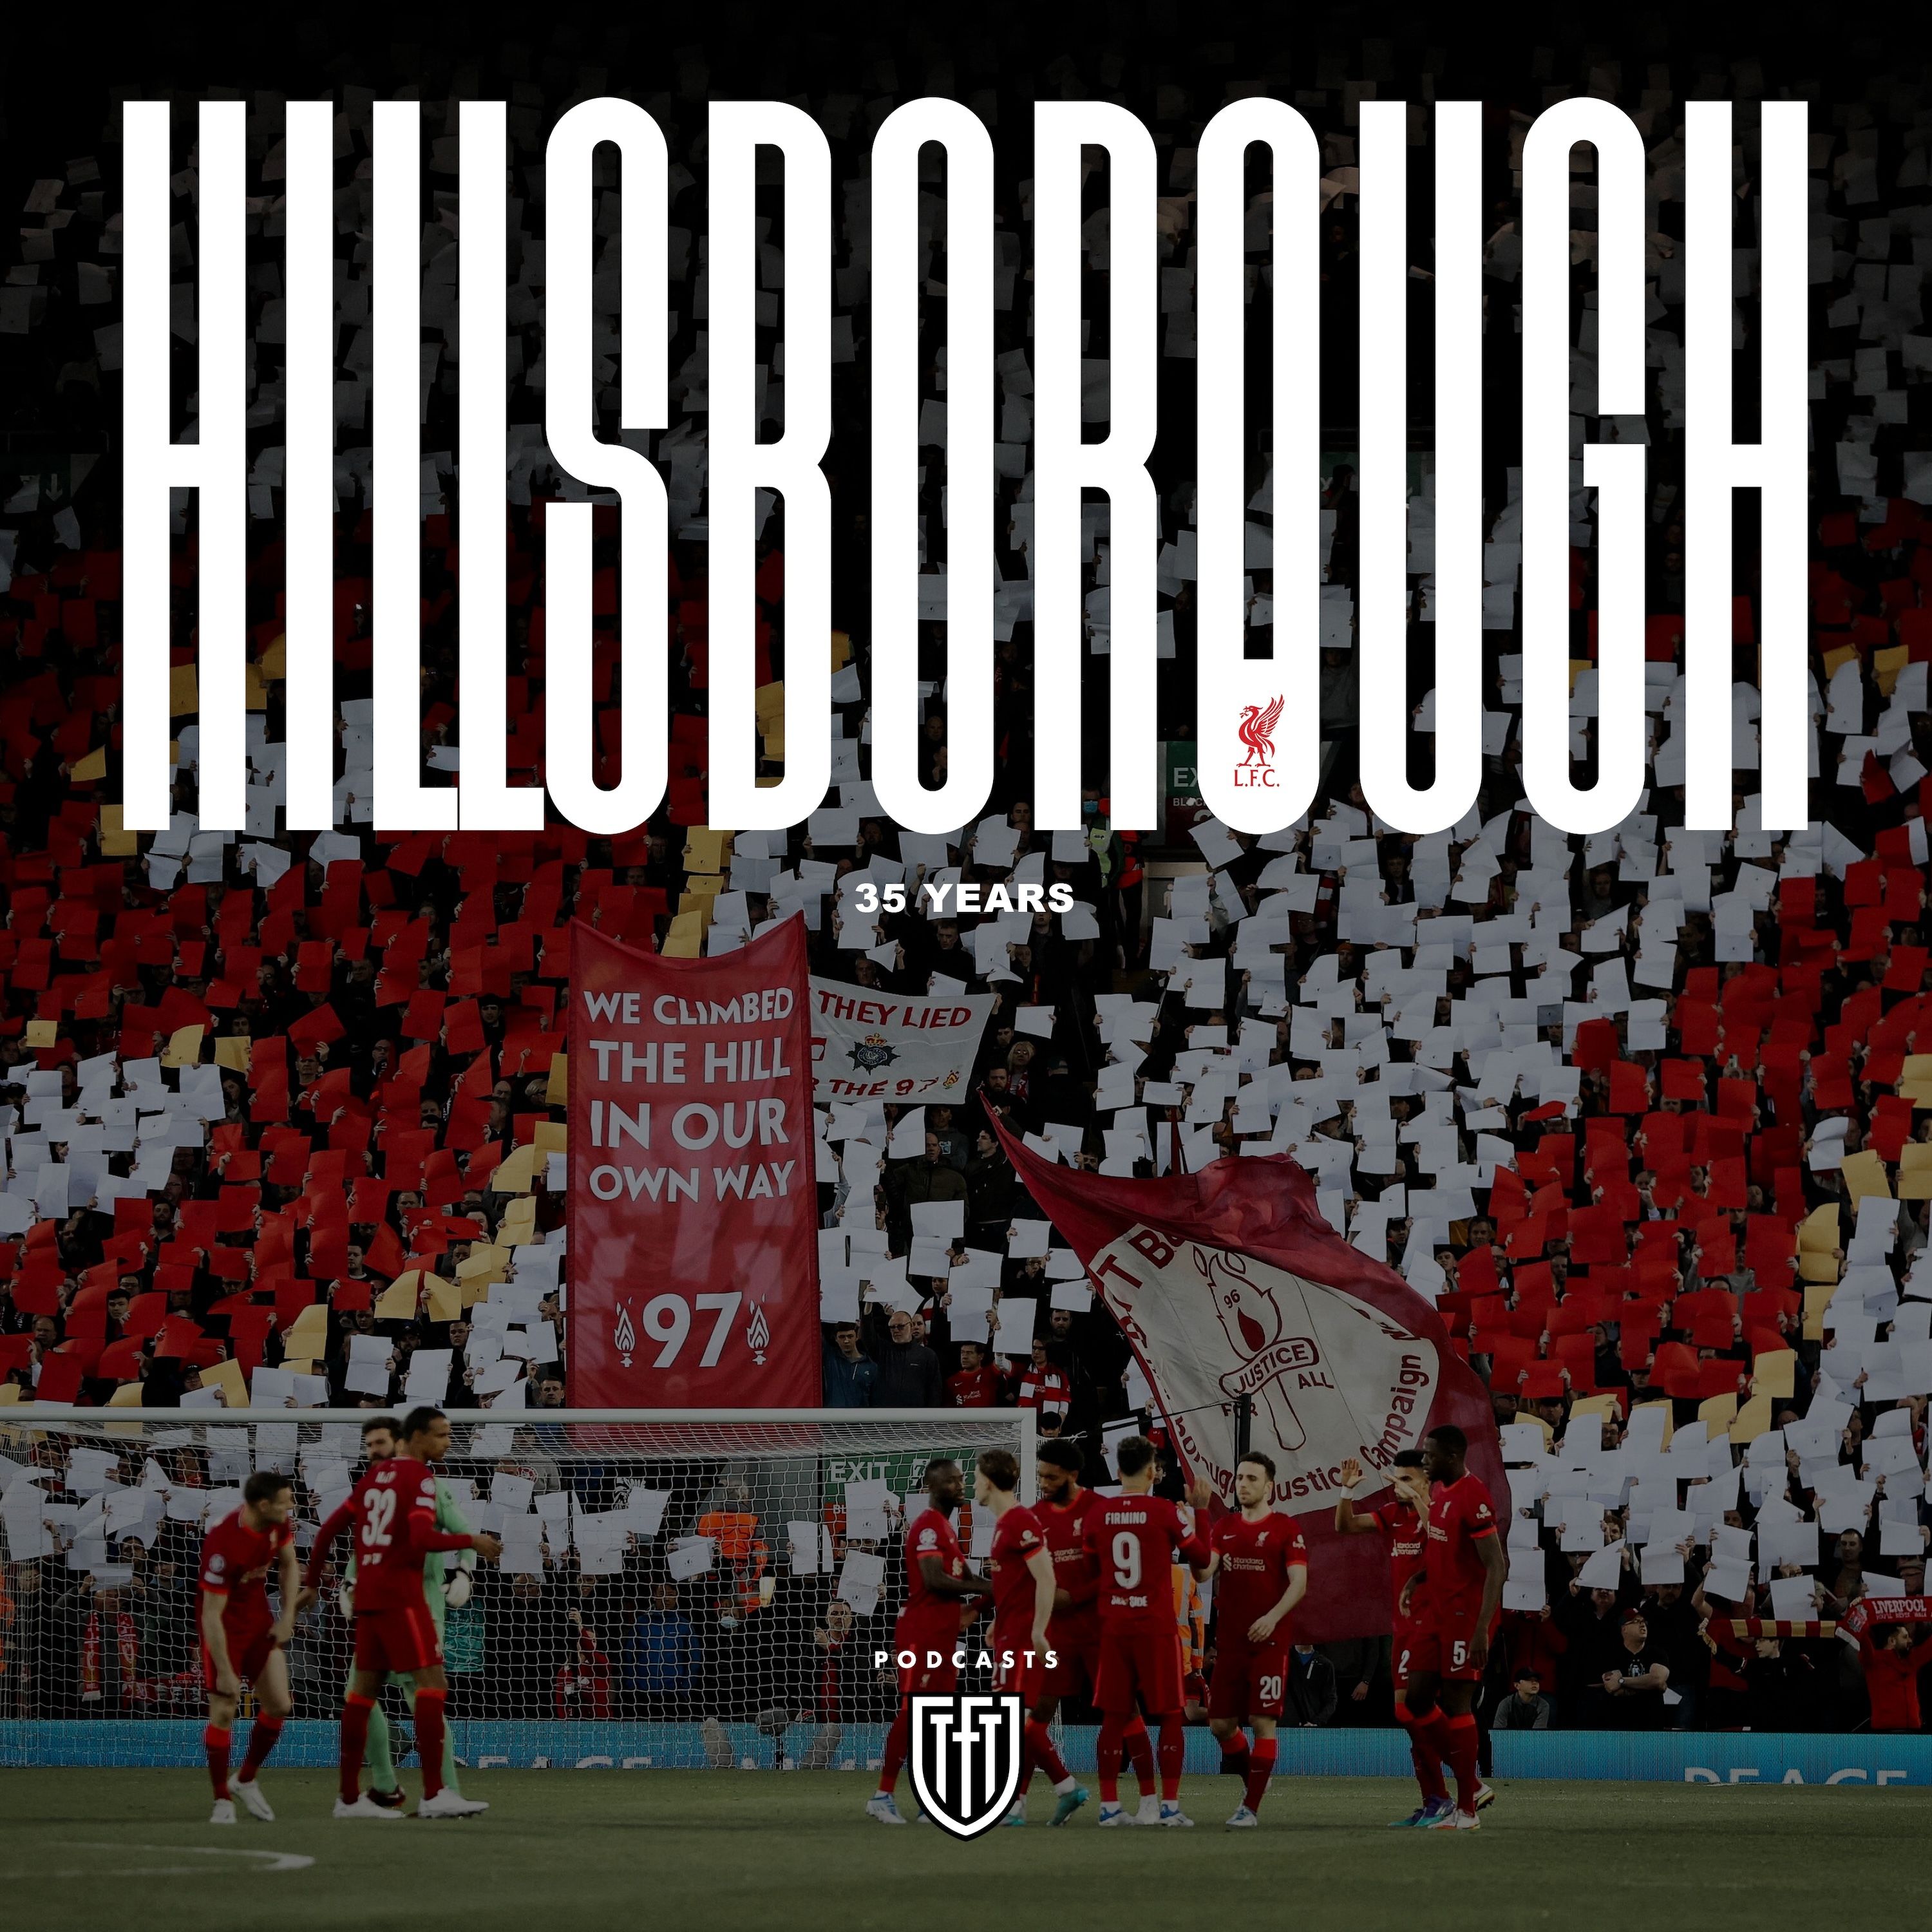 Hillsborough III, with Andrew Knott